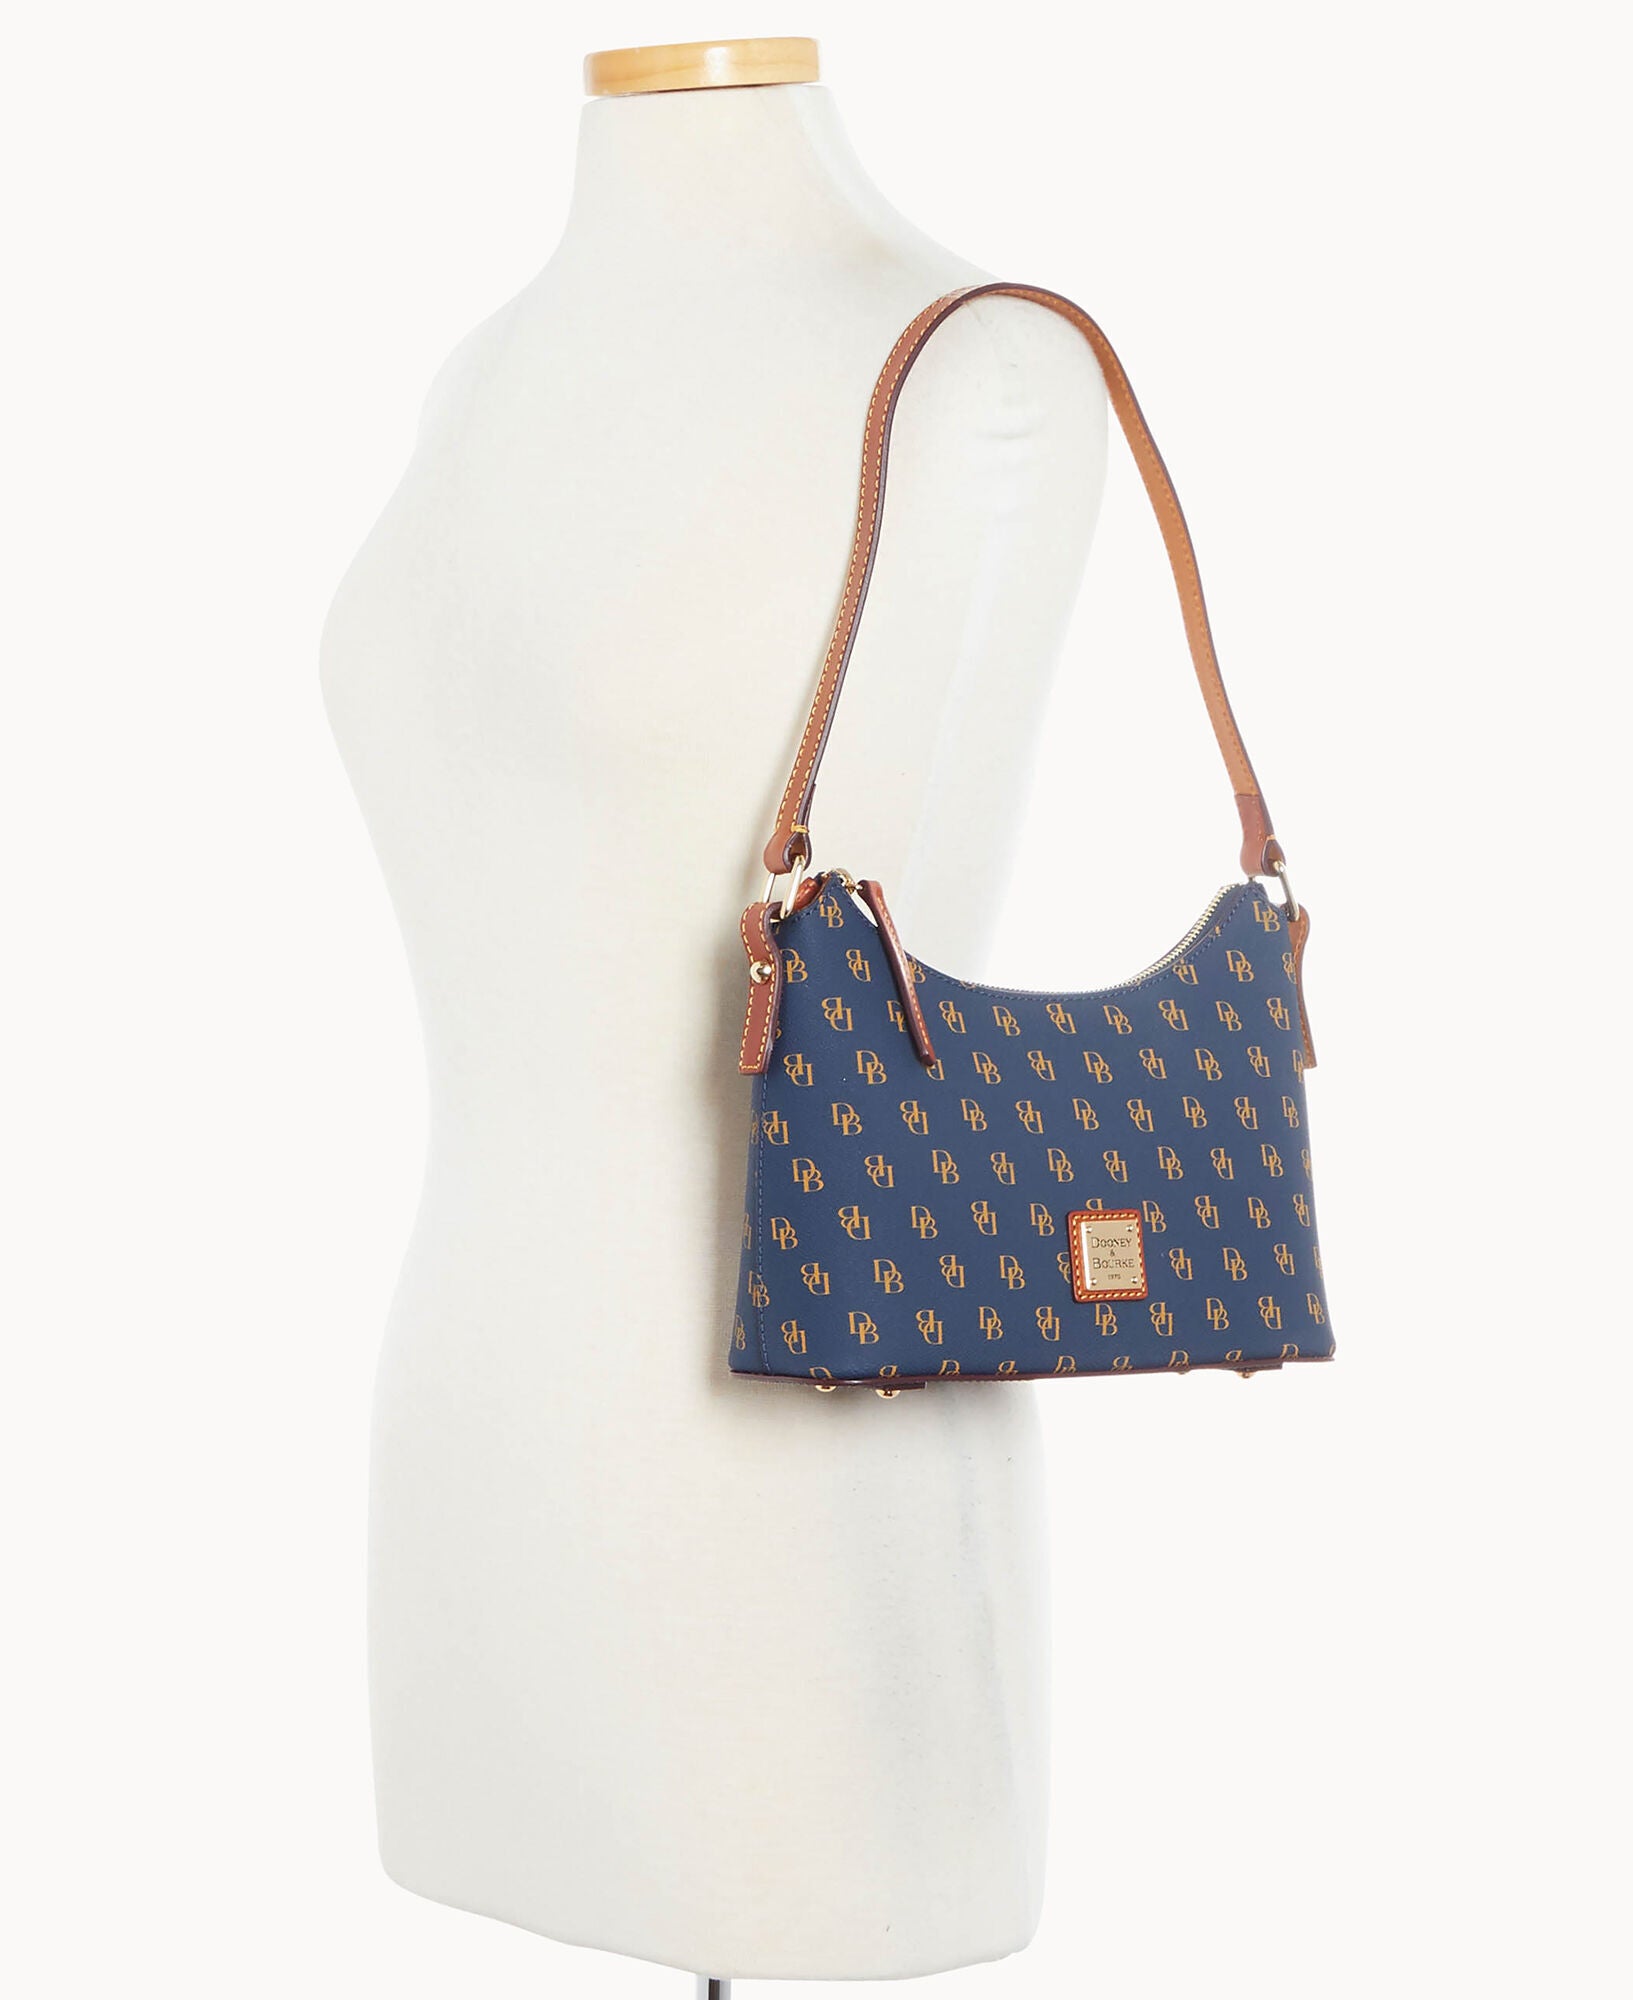 Dooney & Bourke Gretta Baguette Shoulder Handbag